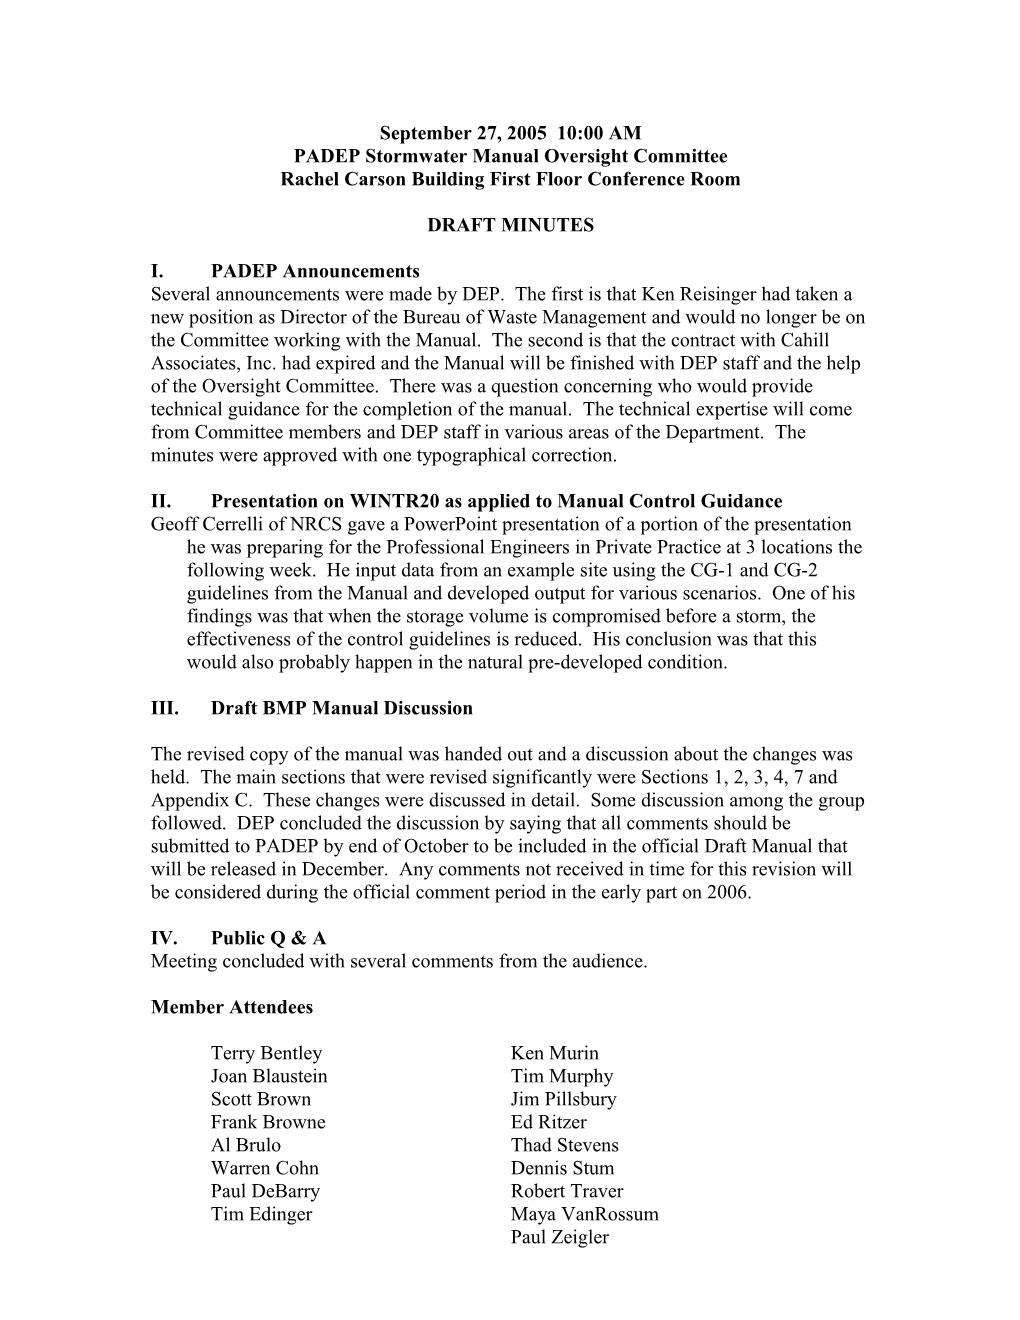 PADEP Stormwater Manual Oversight Committee